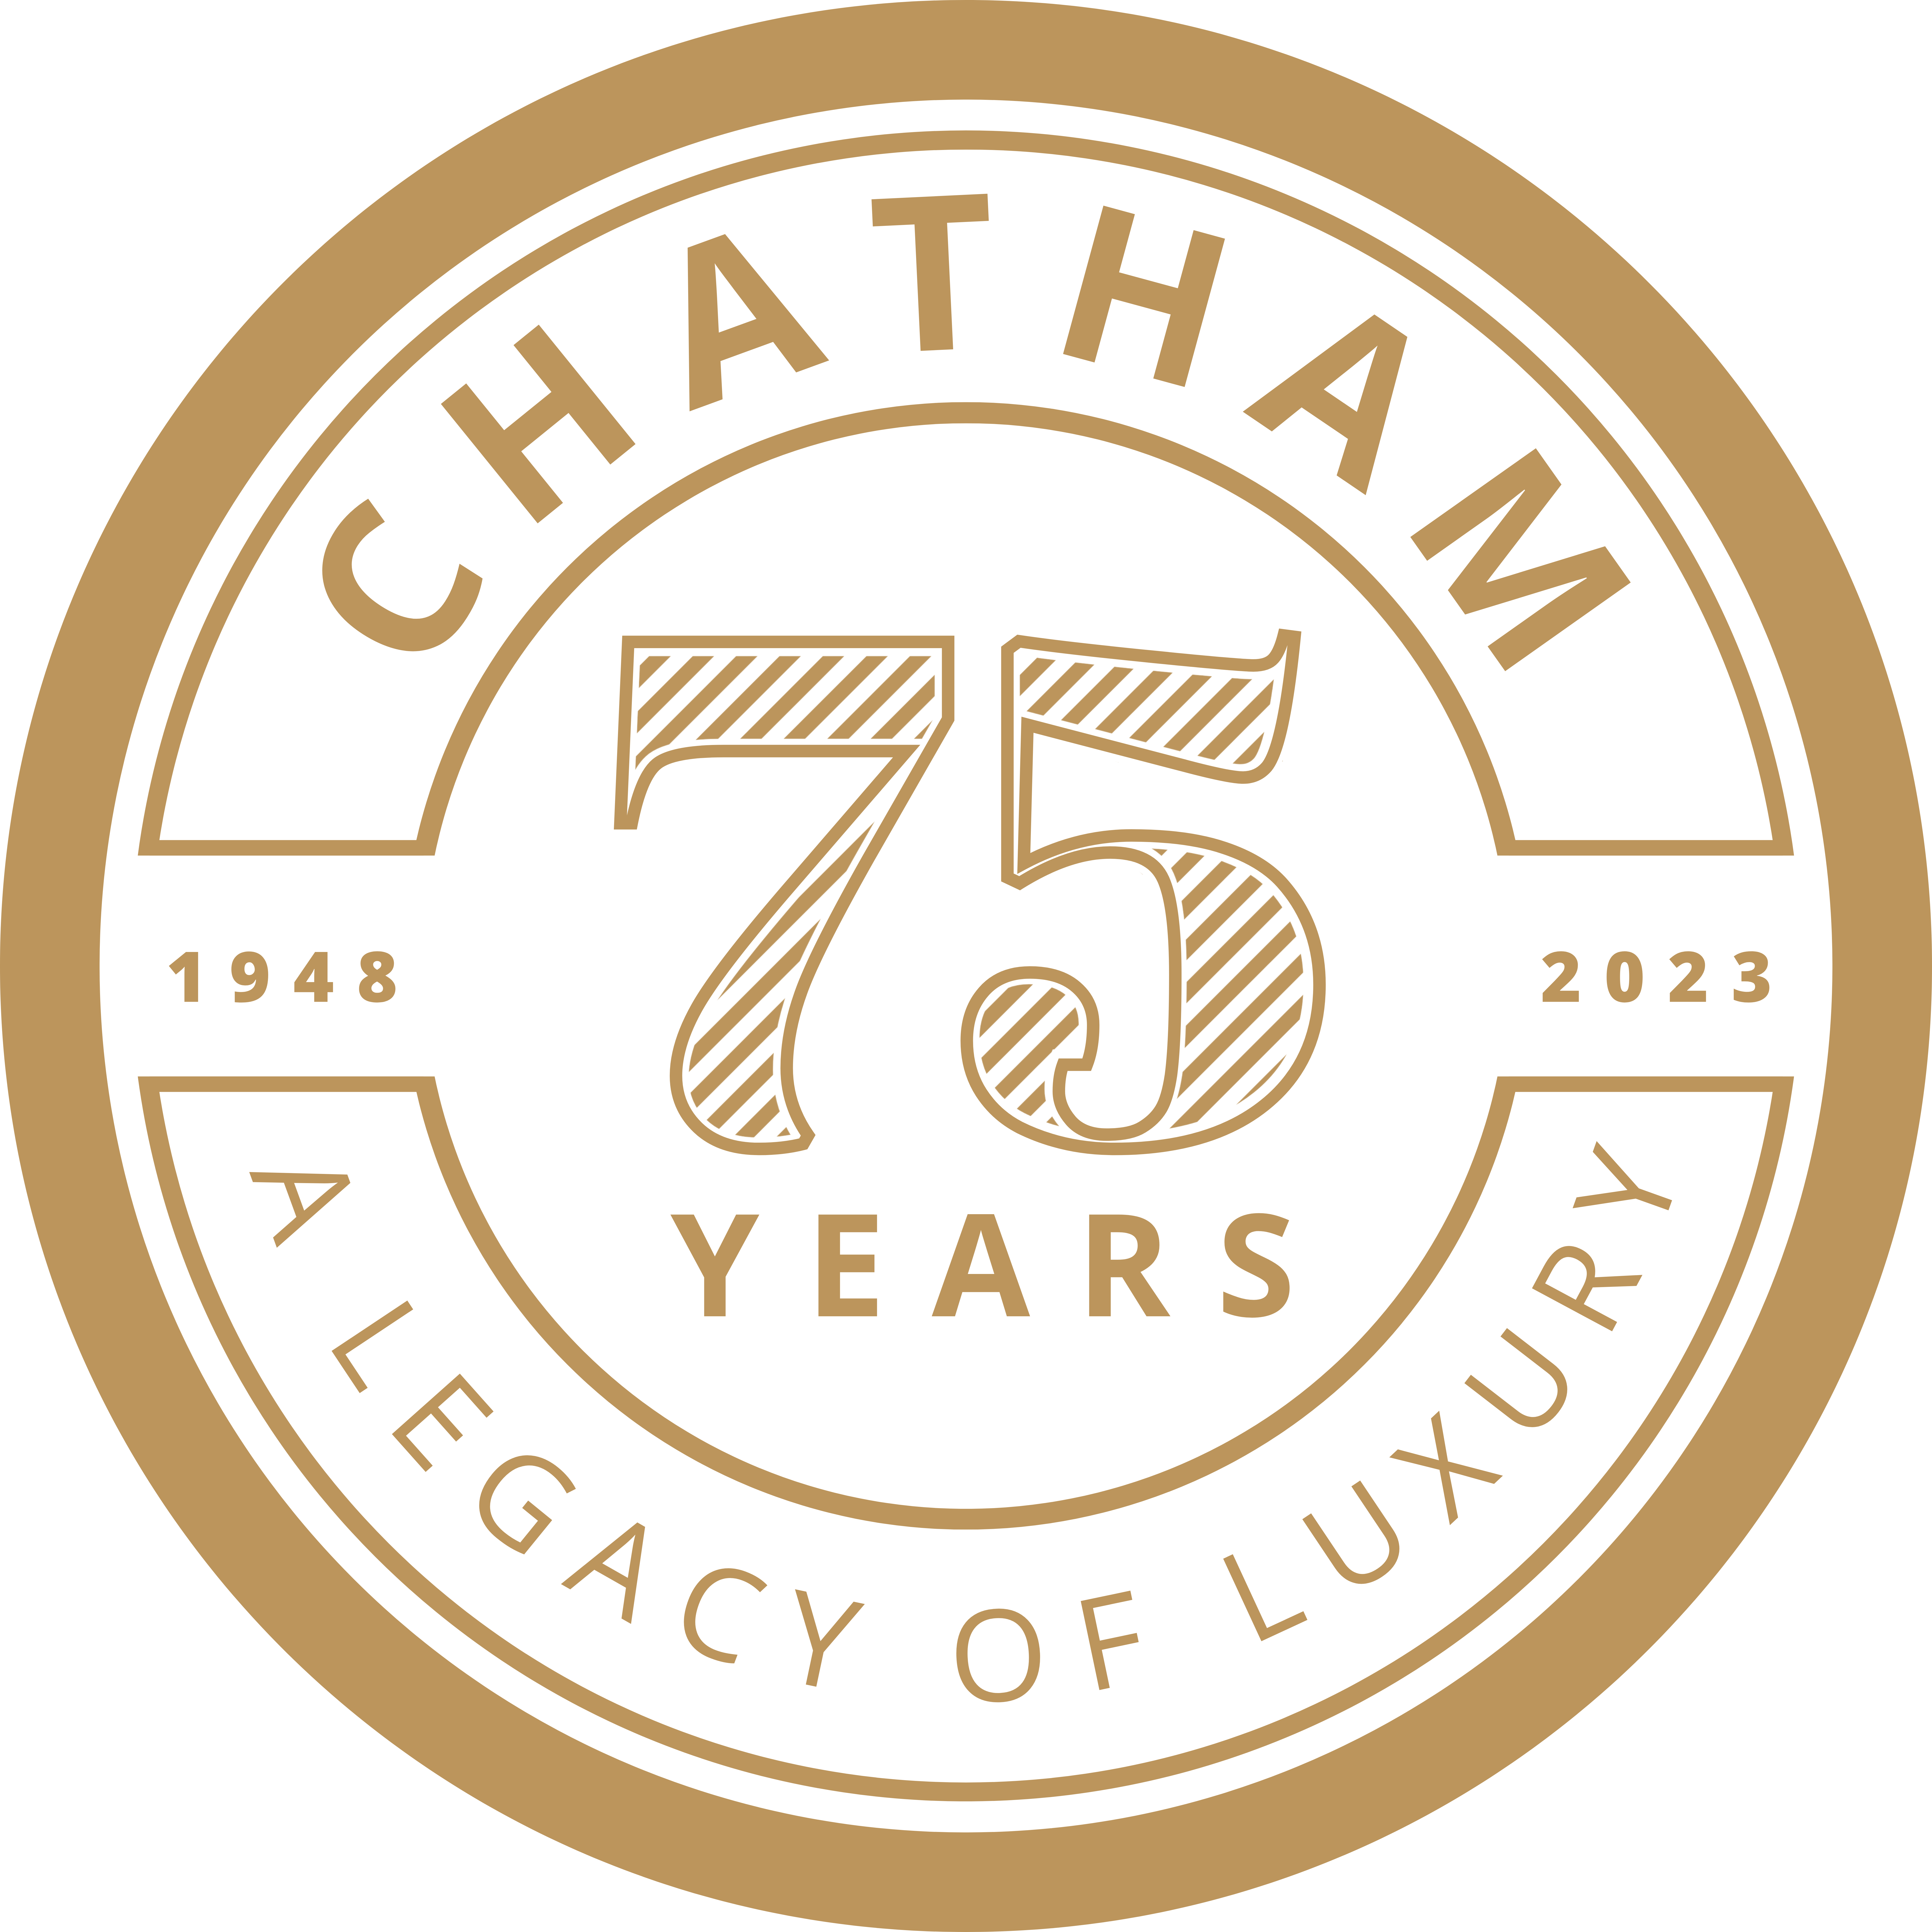 Chatham 75th Anniversary logo